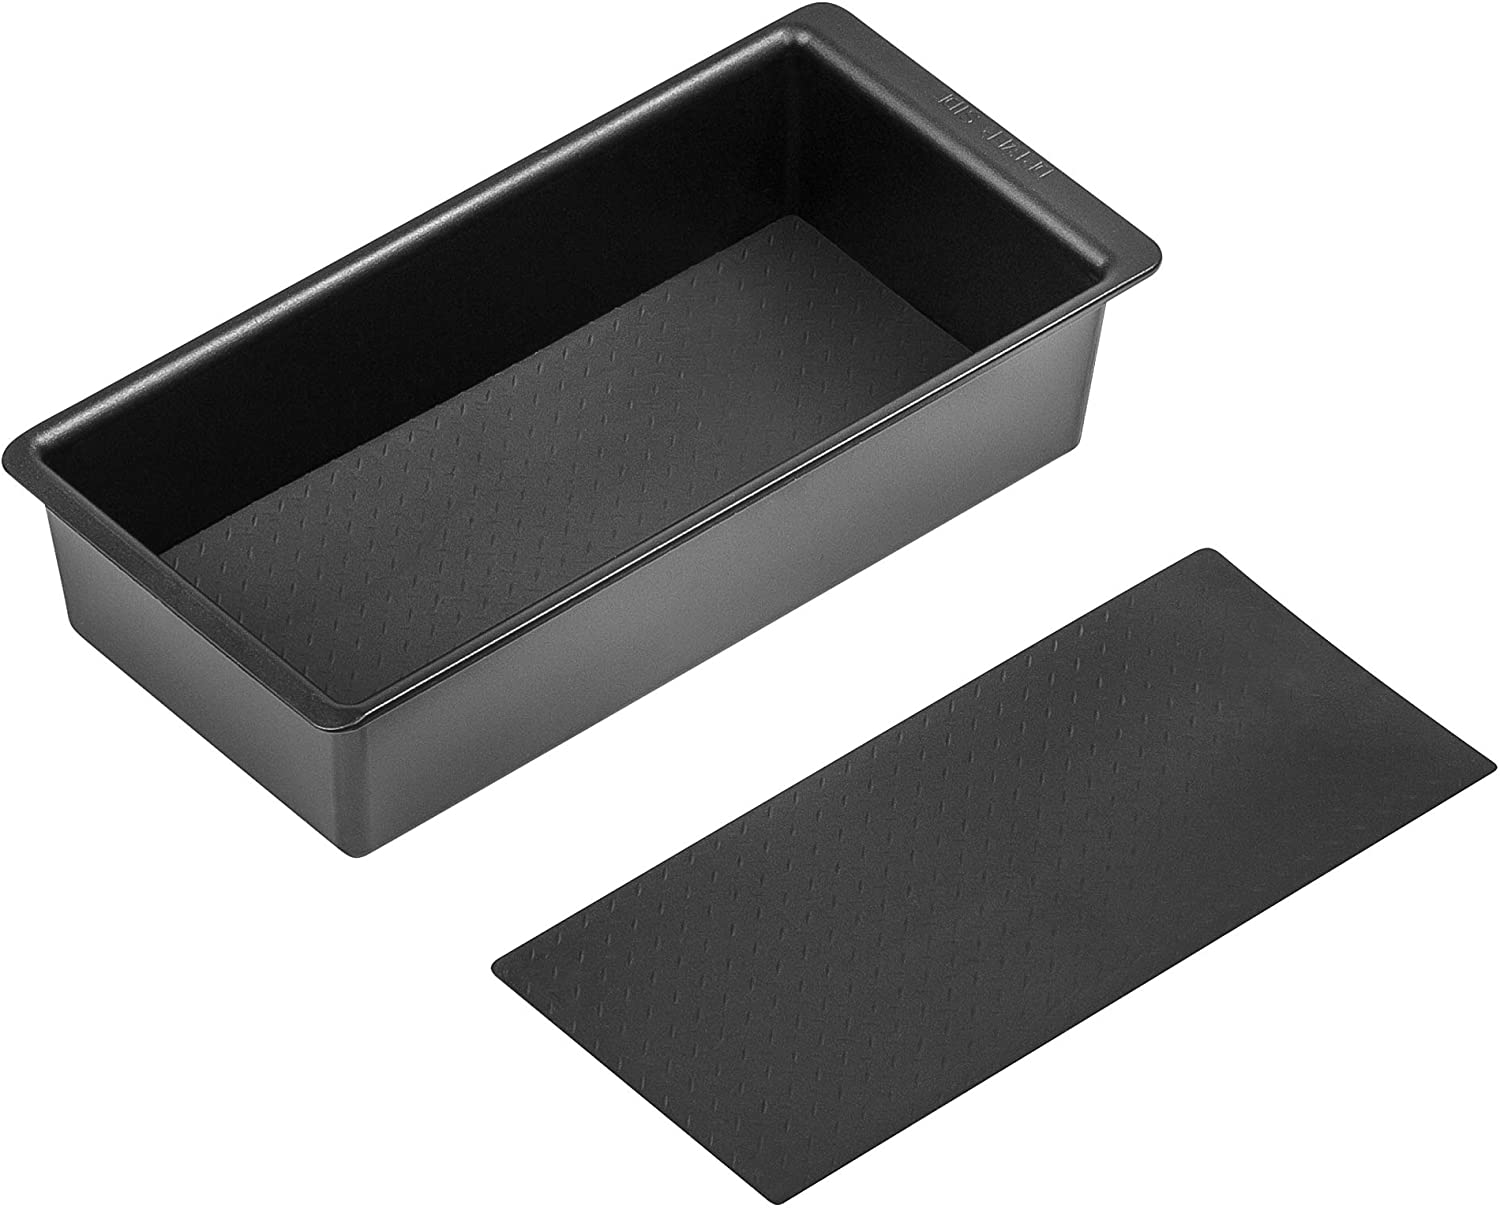 Vehicle OCD Tacoma Console Divider, Tray & Glove Box Organizer Boxed Set (2005-2015)